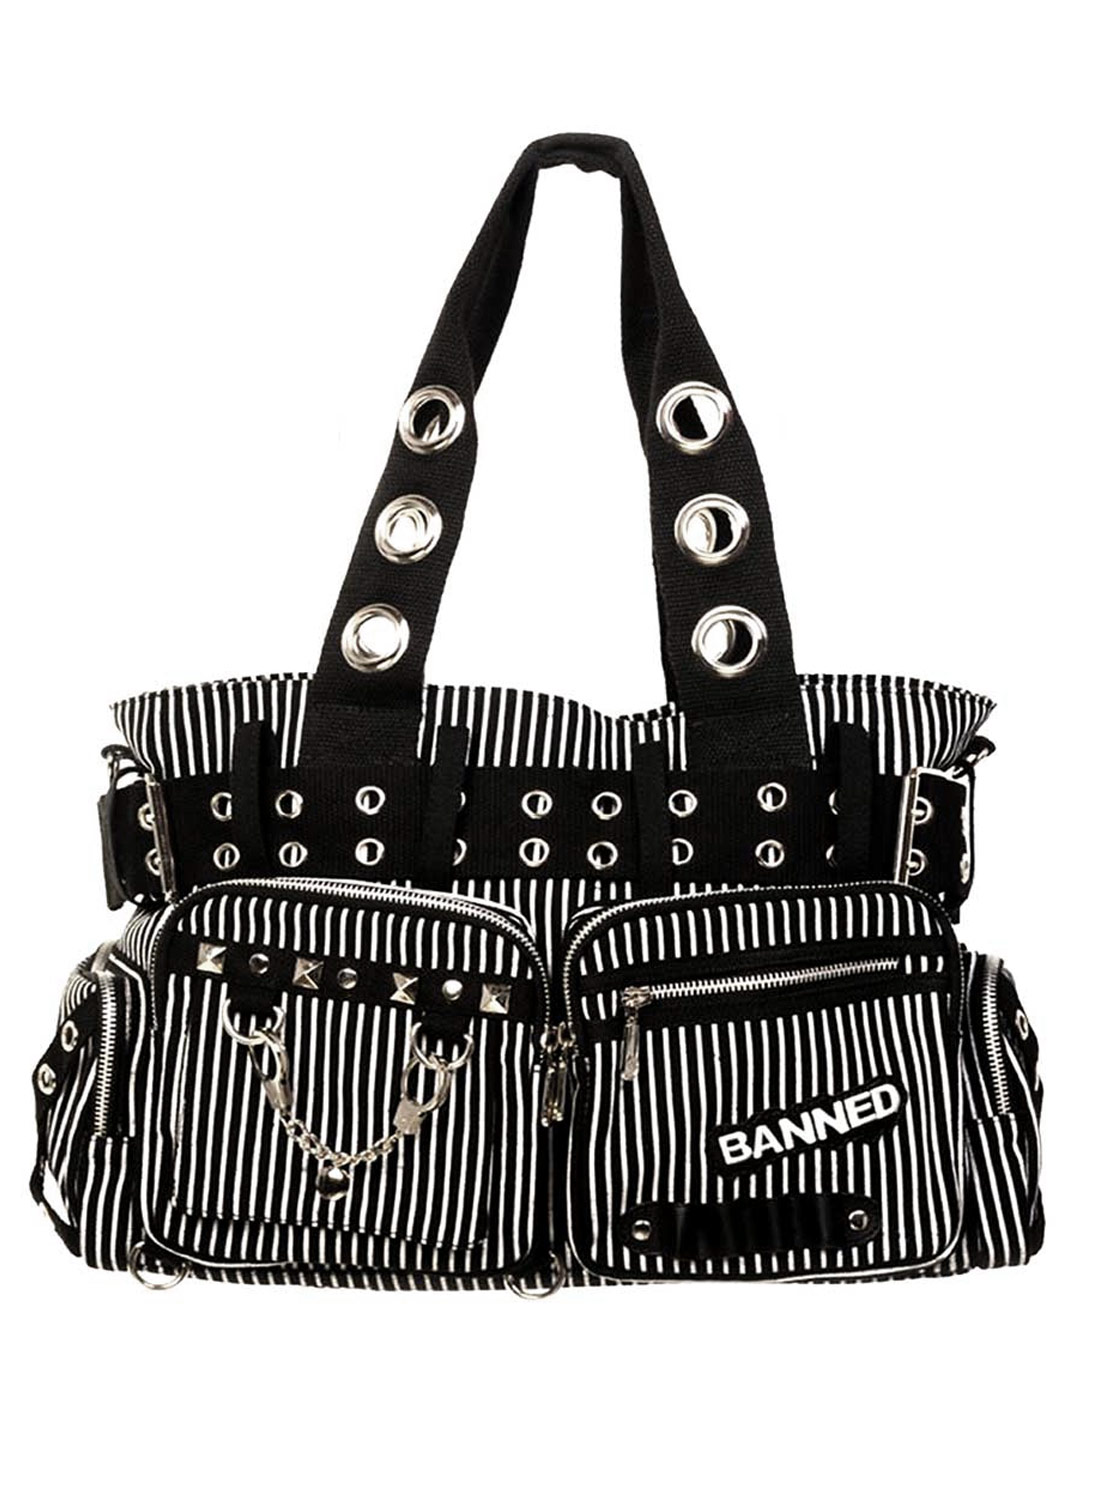 Handcuff Handbag Striped Black/white